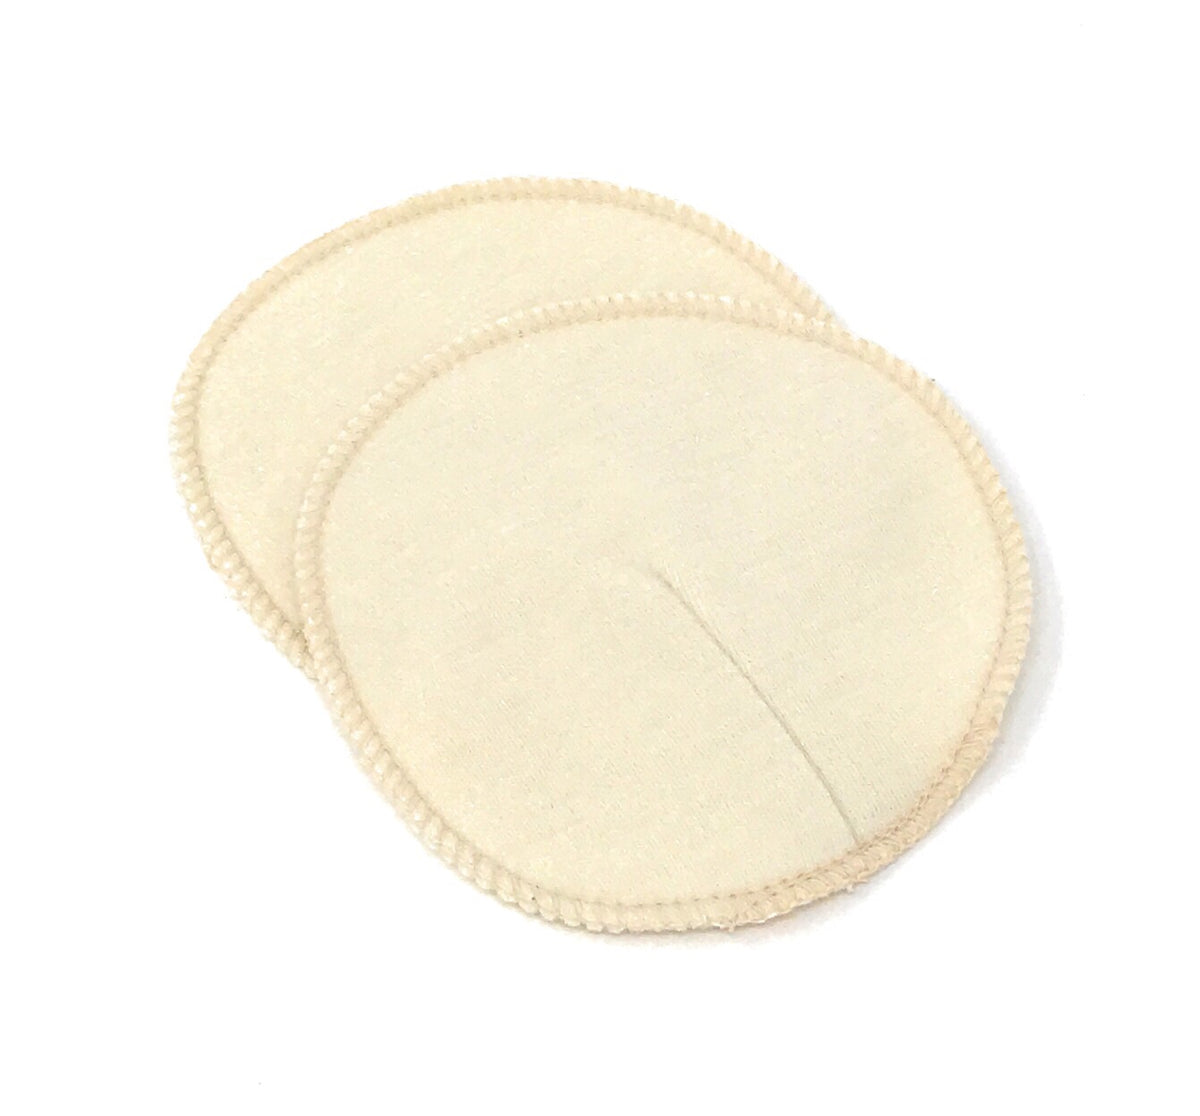  Engel Breast Pads (4) Merino Wool Silk Nursing Feeding Organic  Washable Reusable (1) : Baby